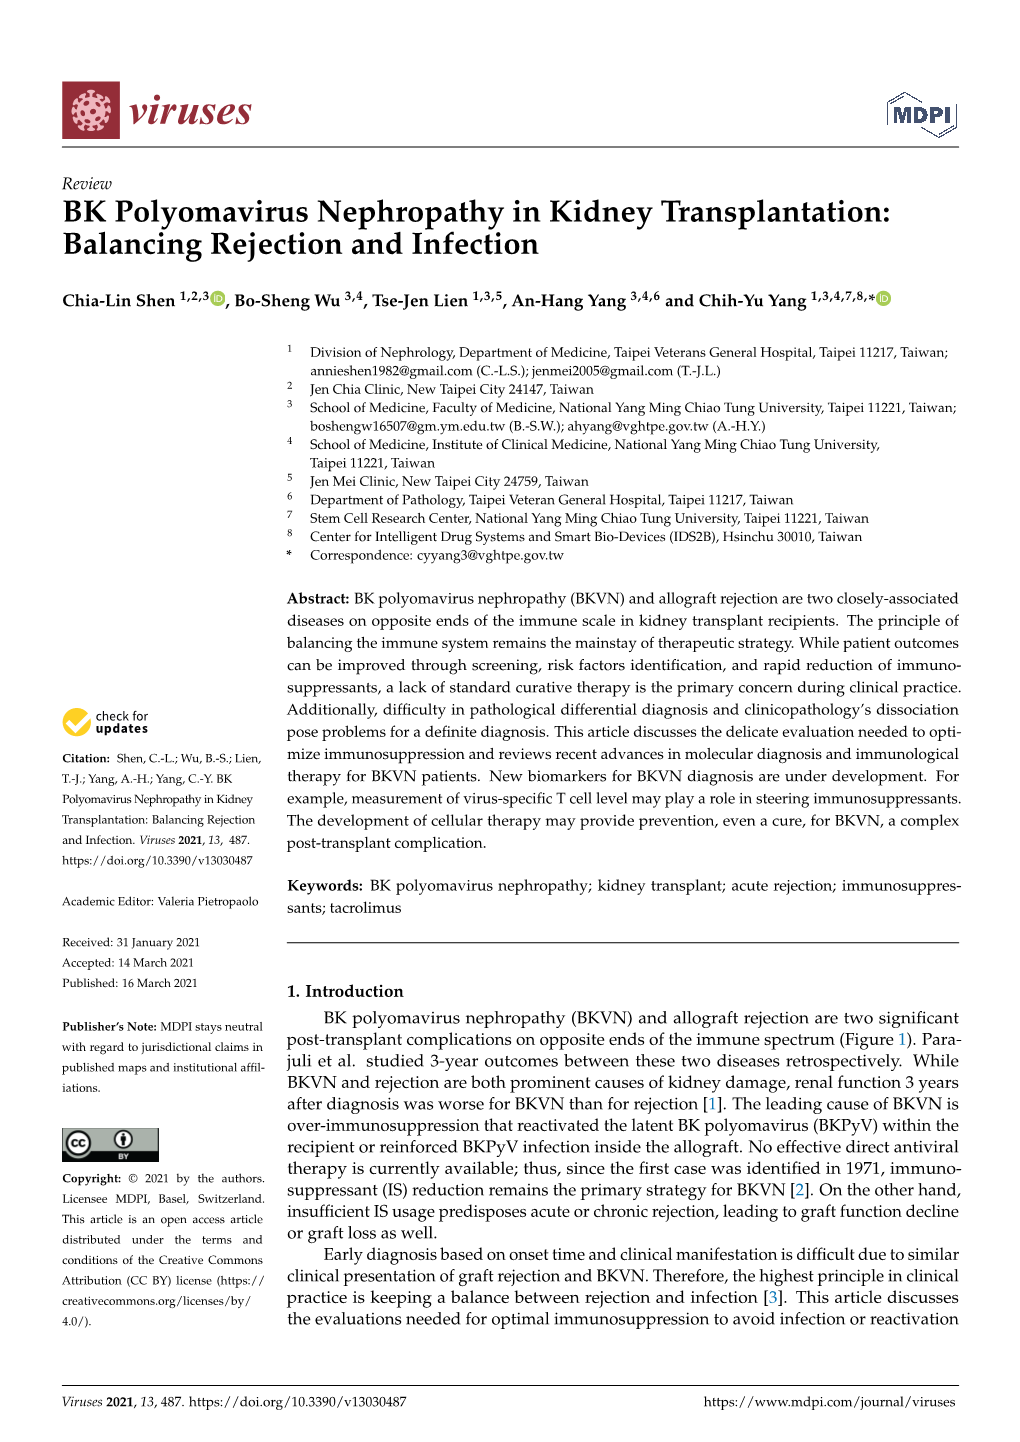 BK Polyomavirus Nephropathy in Kidney Transplantation: Balancing Rejection and Infection